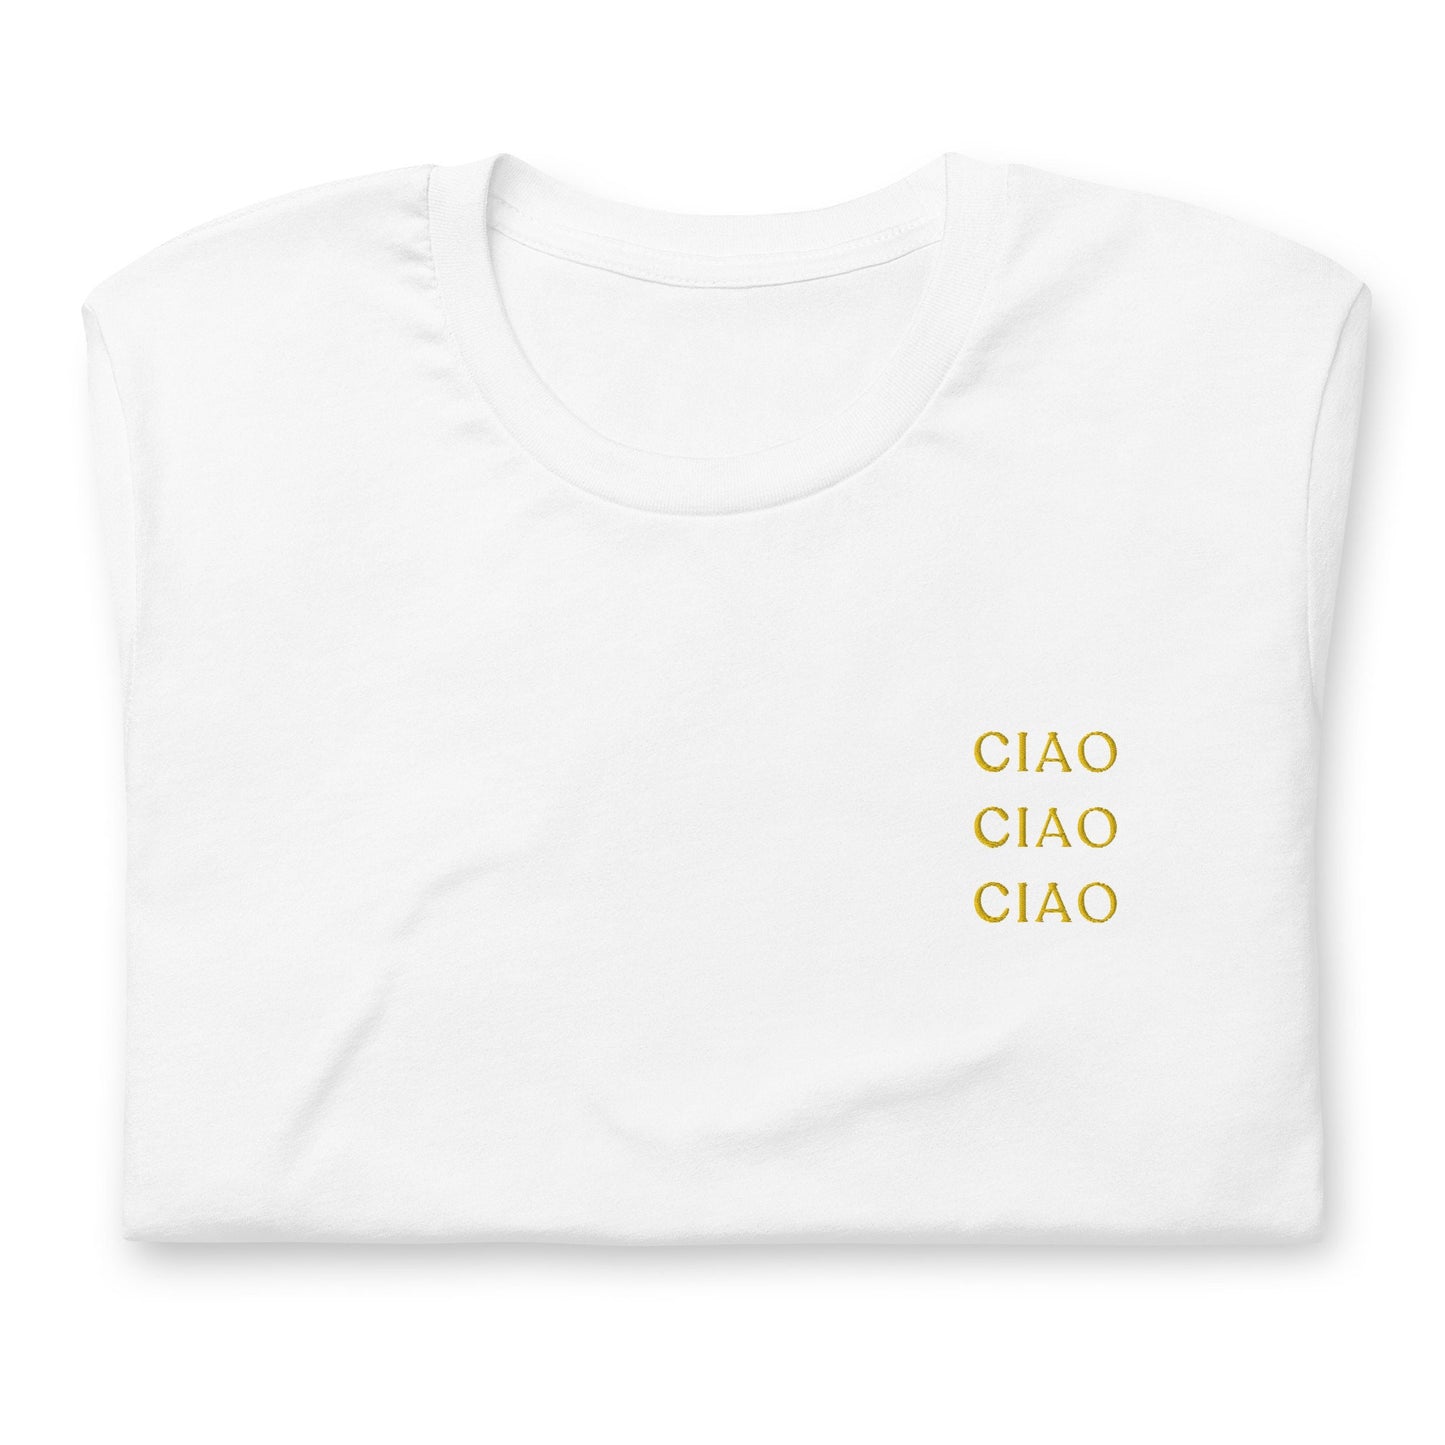 Ciao T - Shirt - Italy, Italian, Hello, Goodbye - Cotton Embroidered Shirt